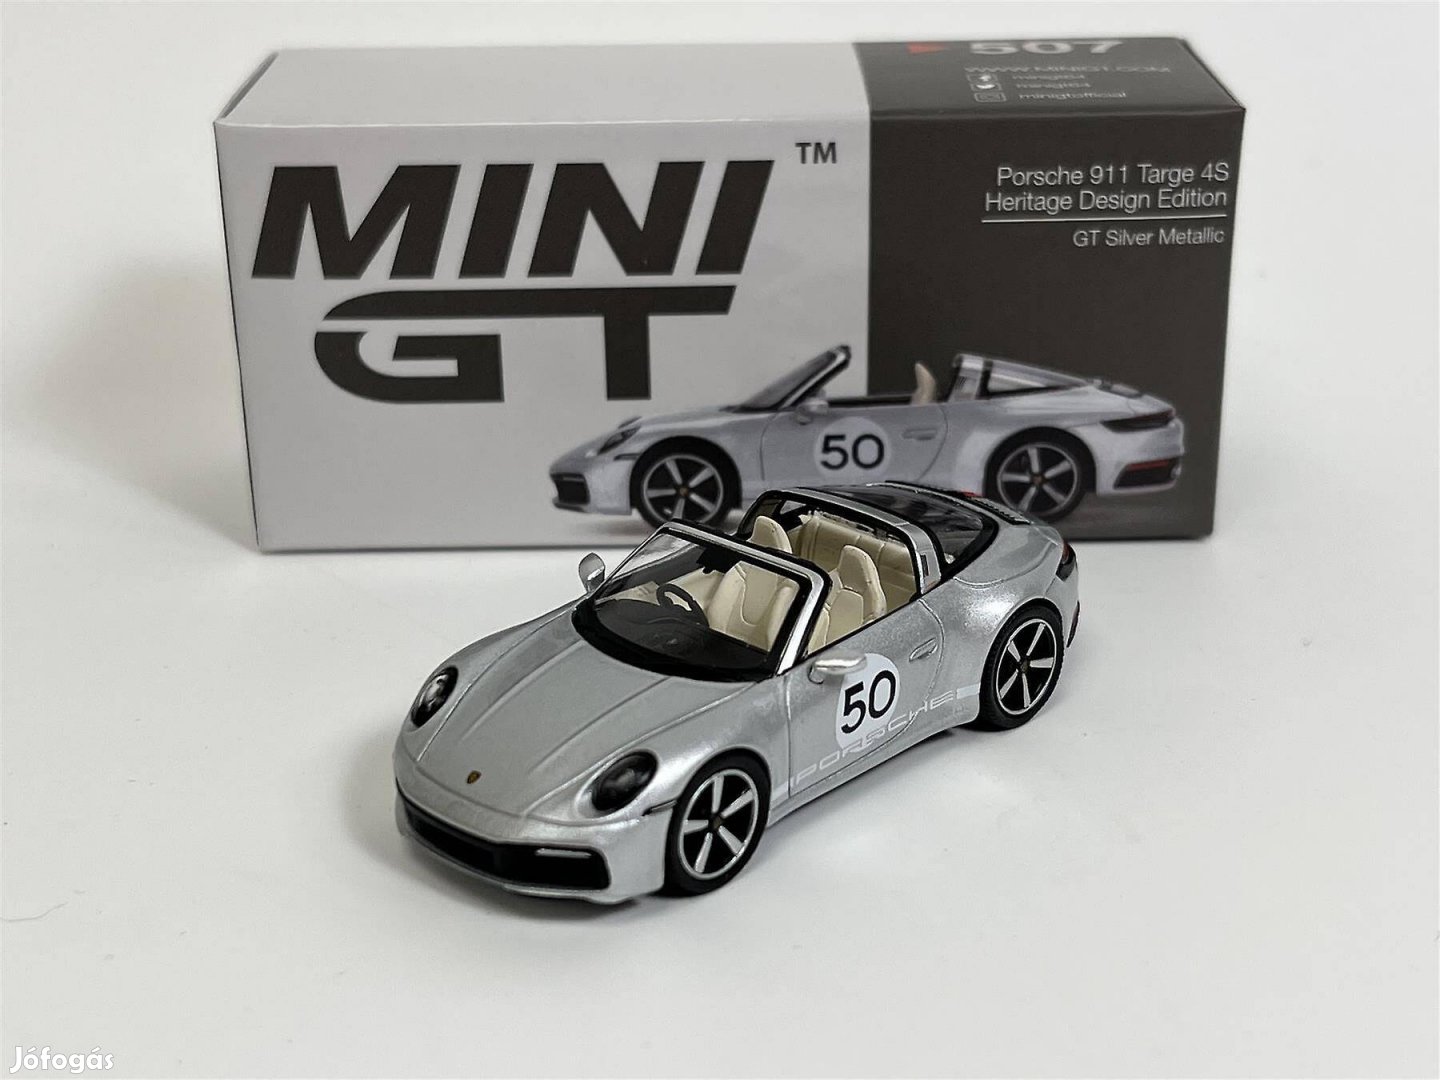 Mini GT Porsche 911 Targa 4S Heritage Design Edition GT Silver Metalli